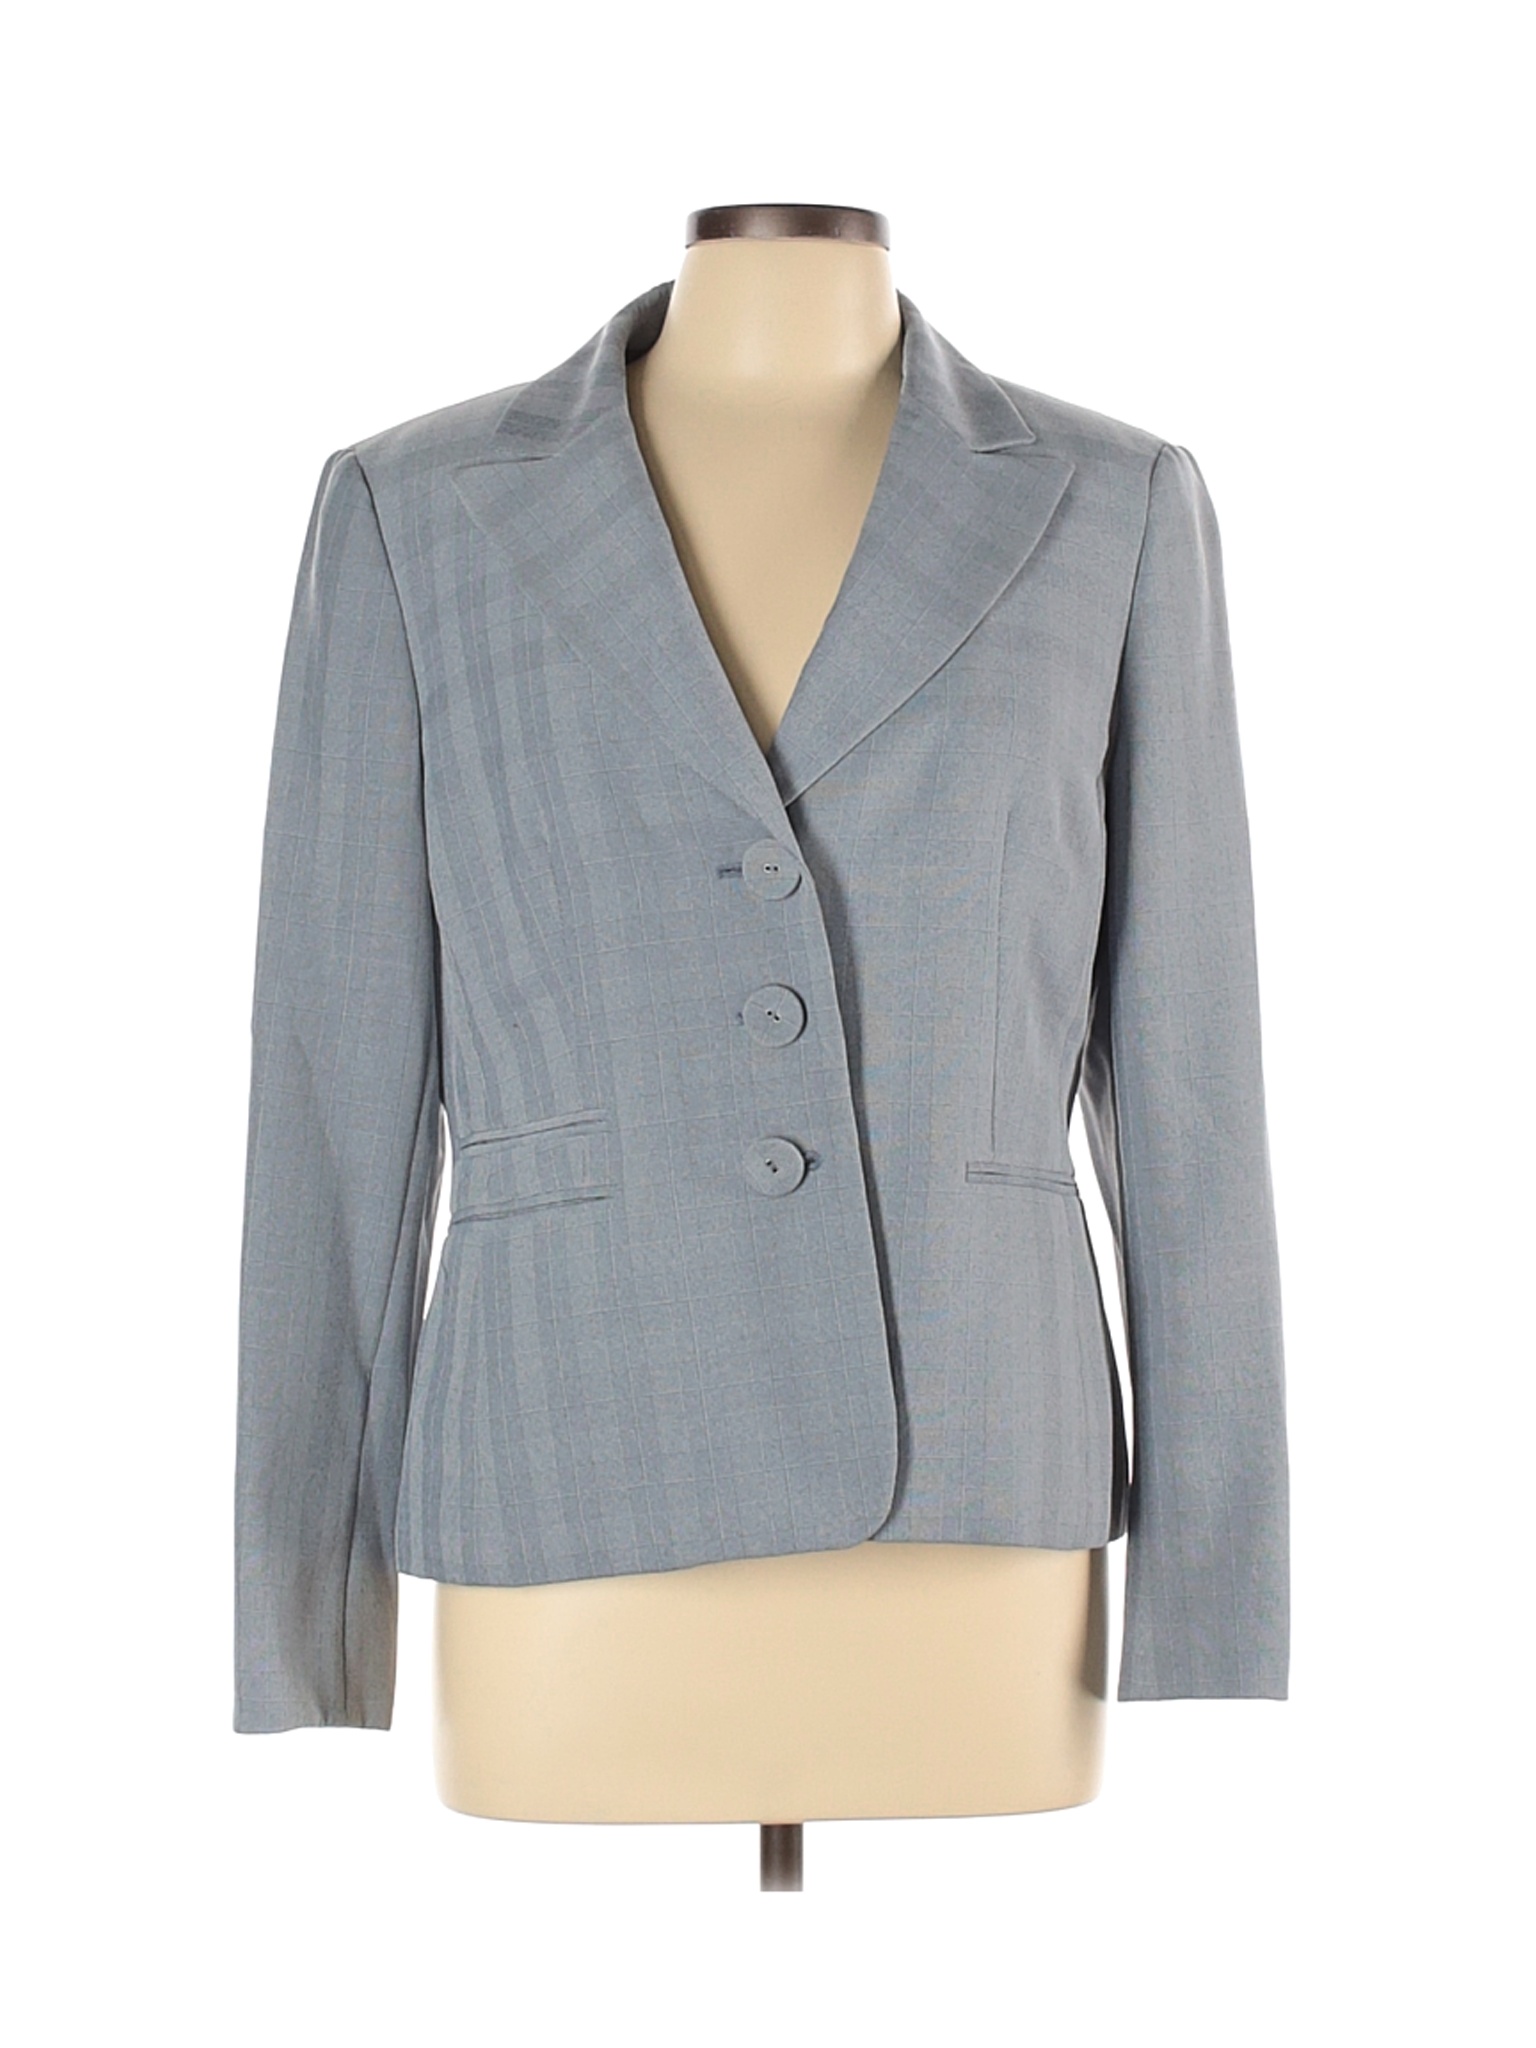 Evan Picone Women Gray Jacket 12 | eBay